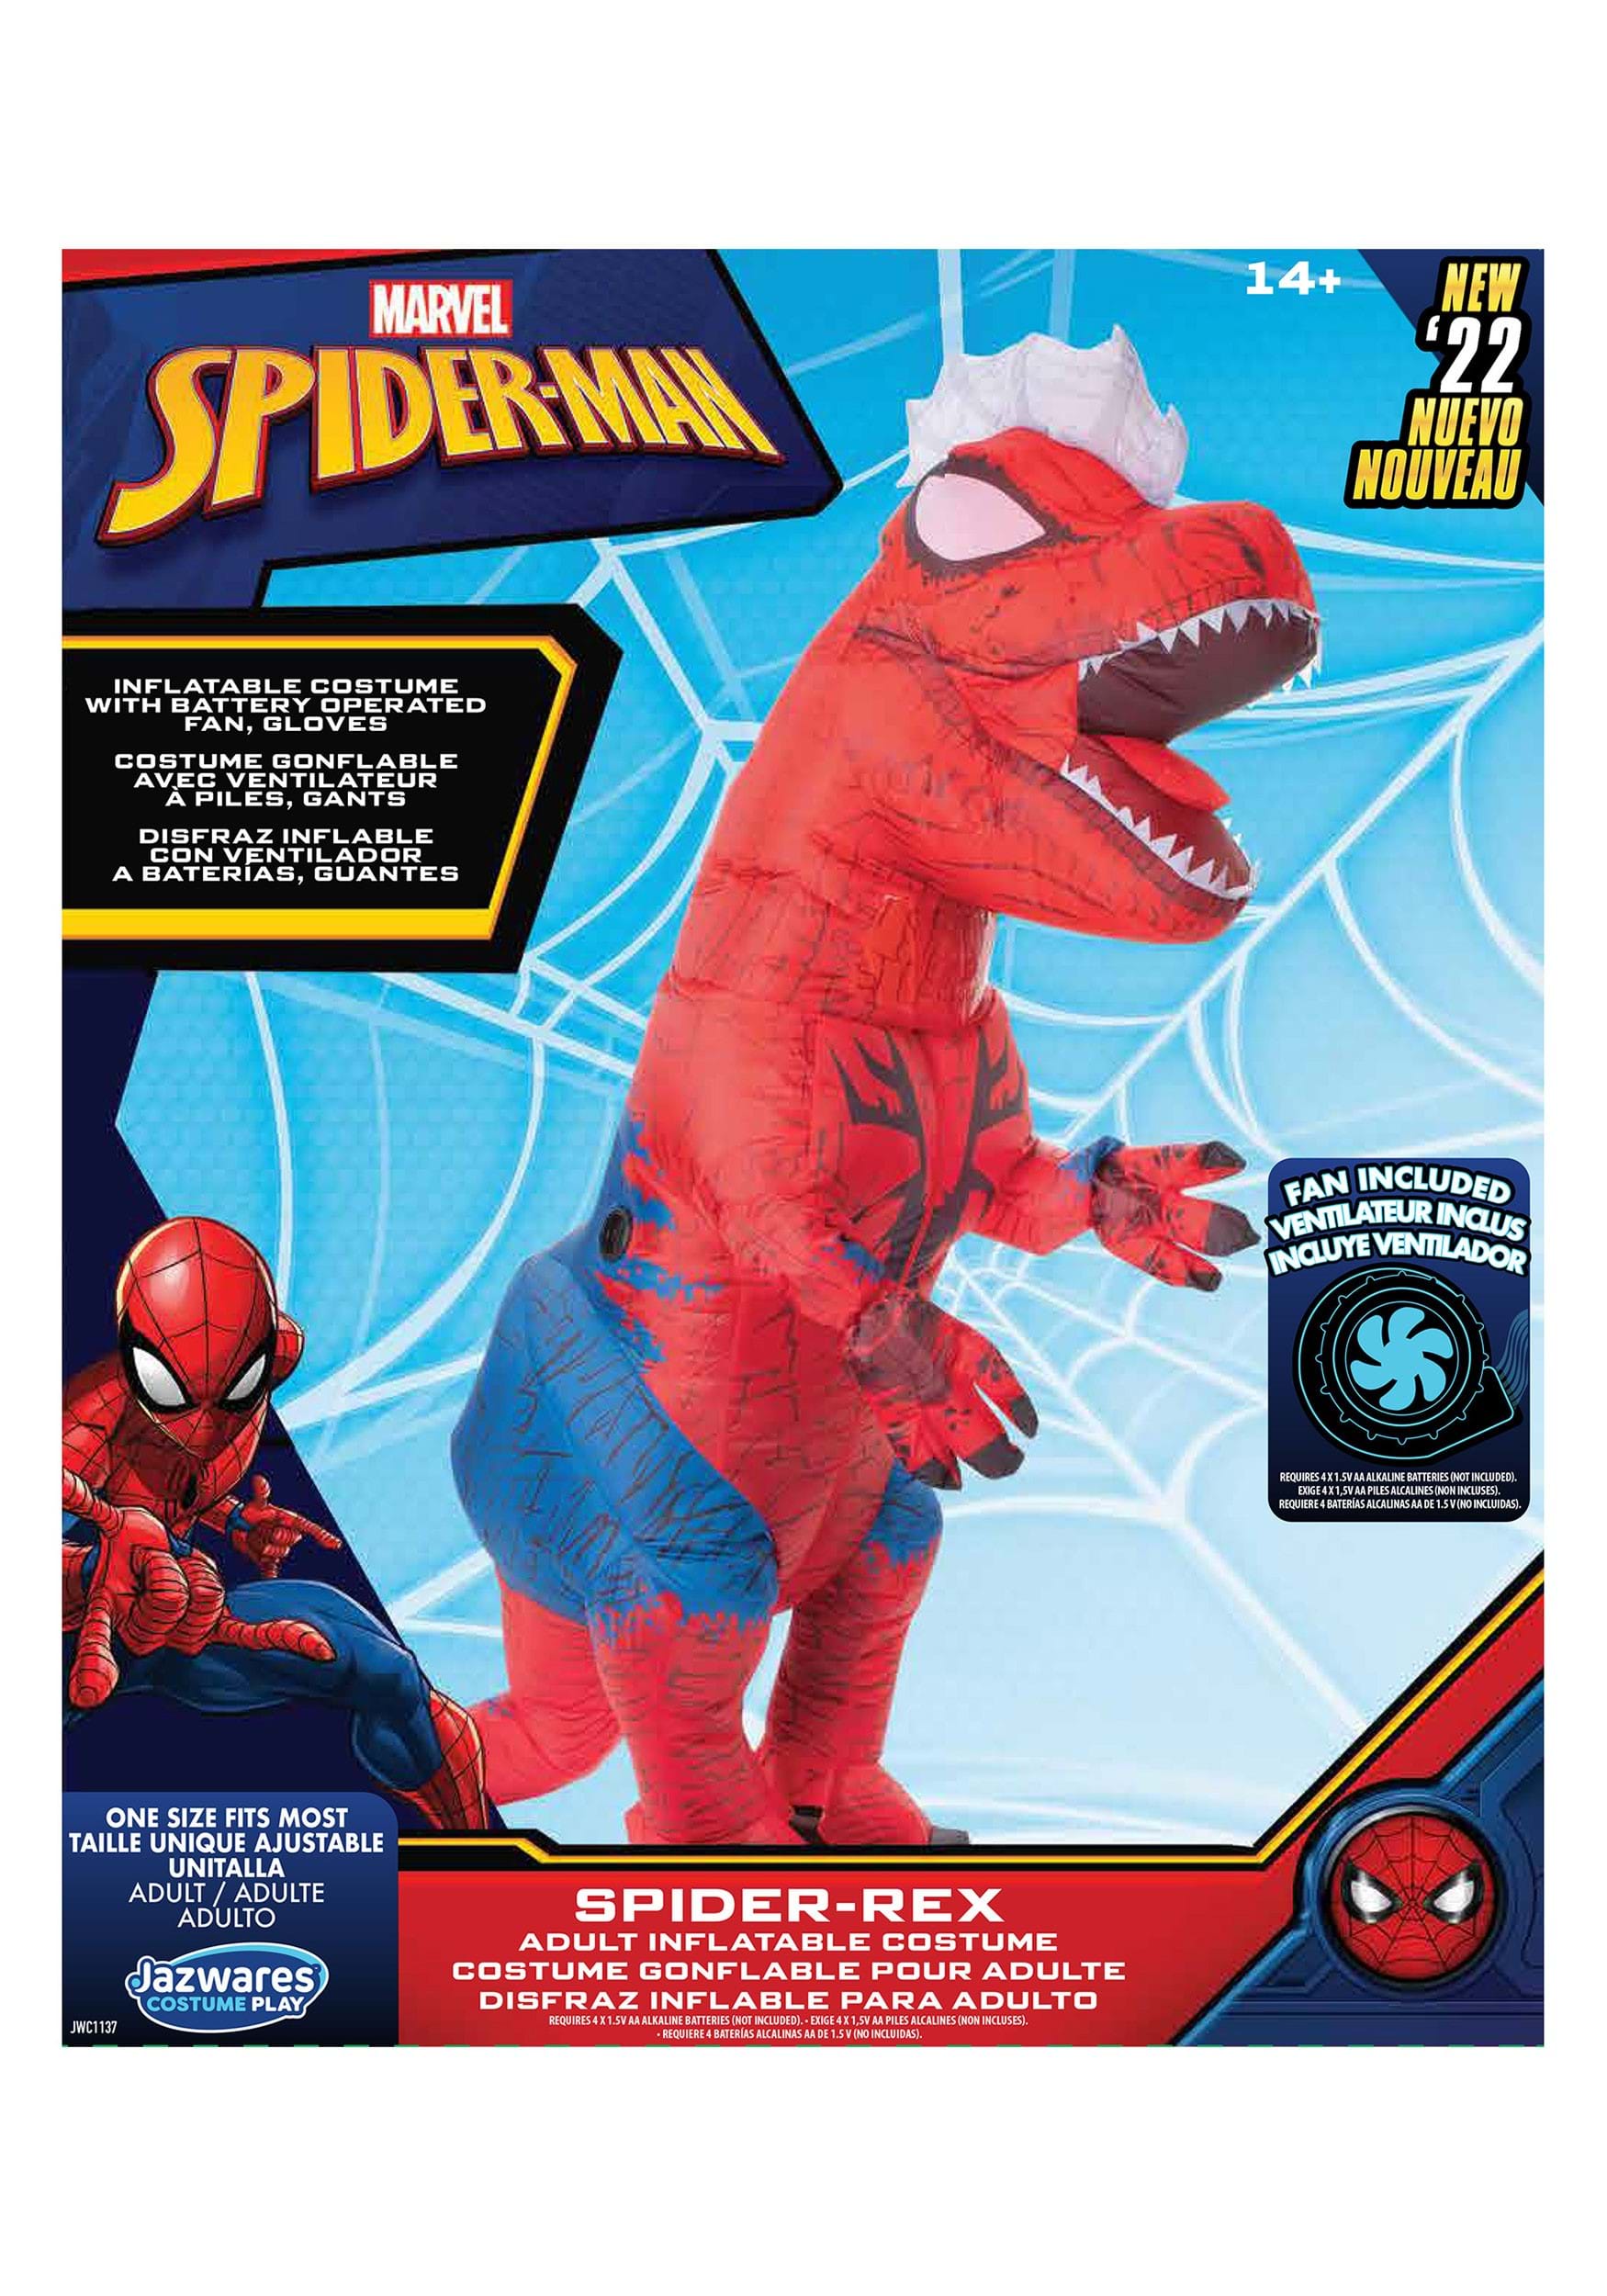 Marvel Inflatable Adult Spider-Rex Costume , Spider-Man Dinosaur Costume